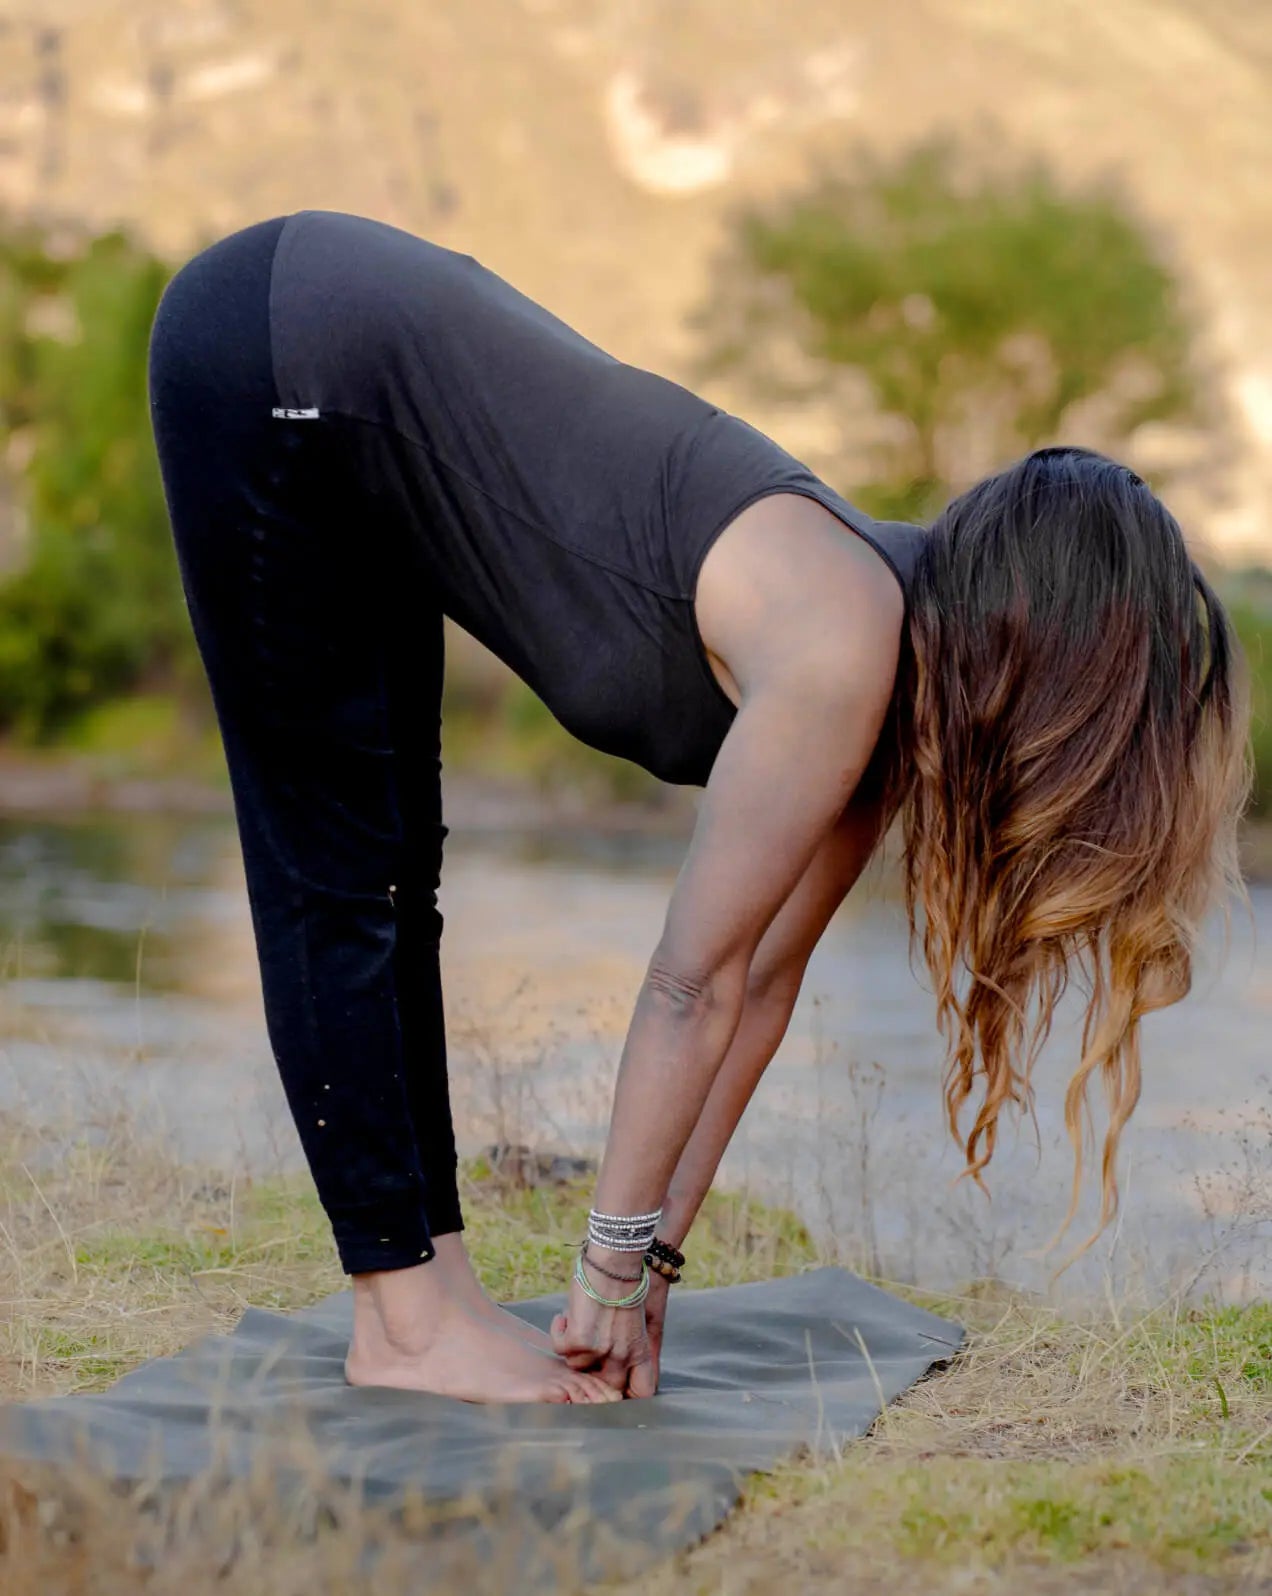 A woman wearing a black alpaca racer tank doing yoga poses